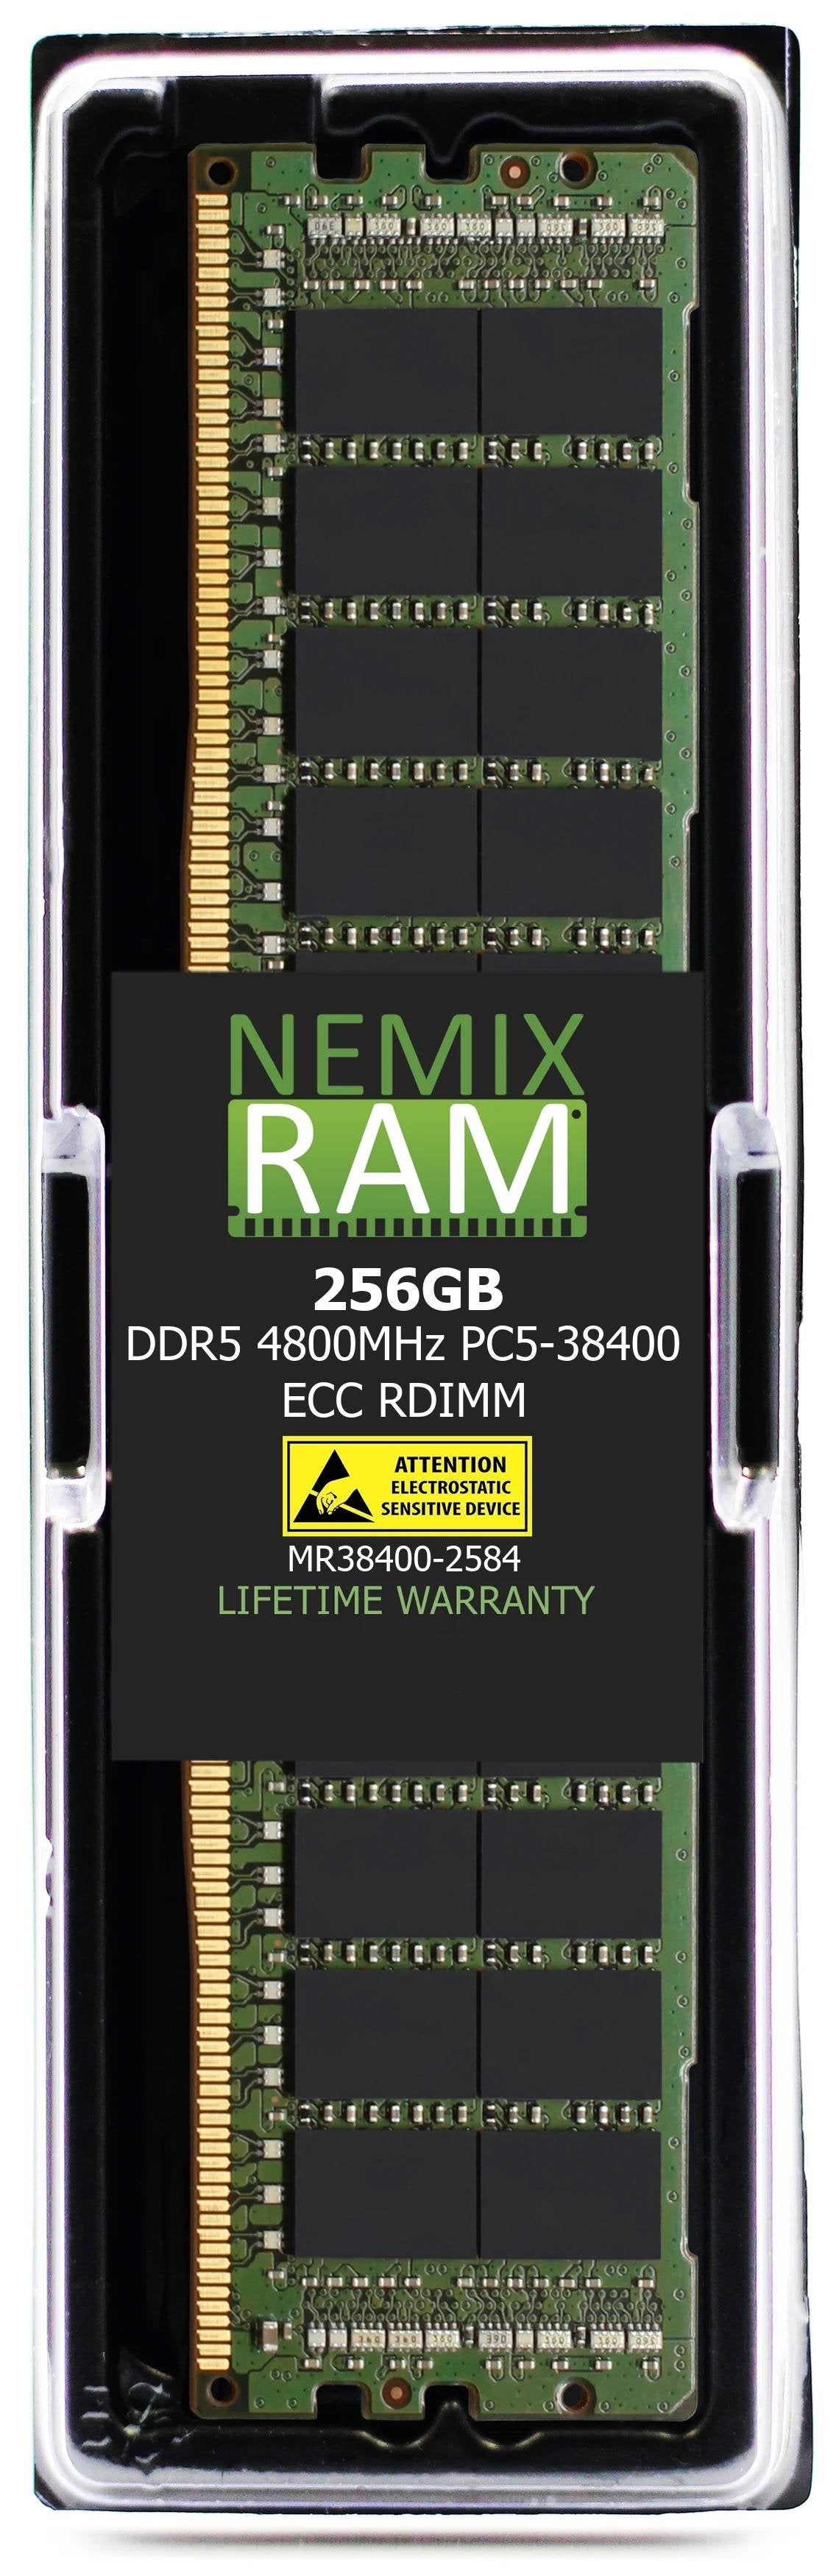 NEMIX RAM 256GB DDR5 4800MHz PC5-38400 ECC RDIMM Compatible with Hynix HMCT14MEERA152N